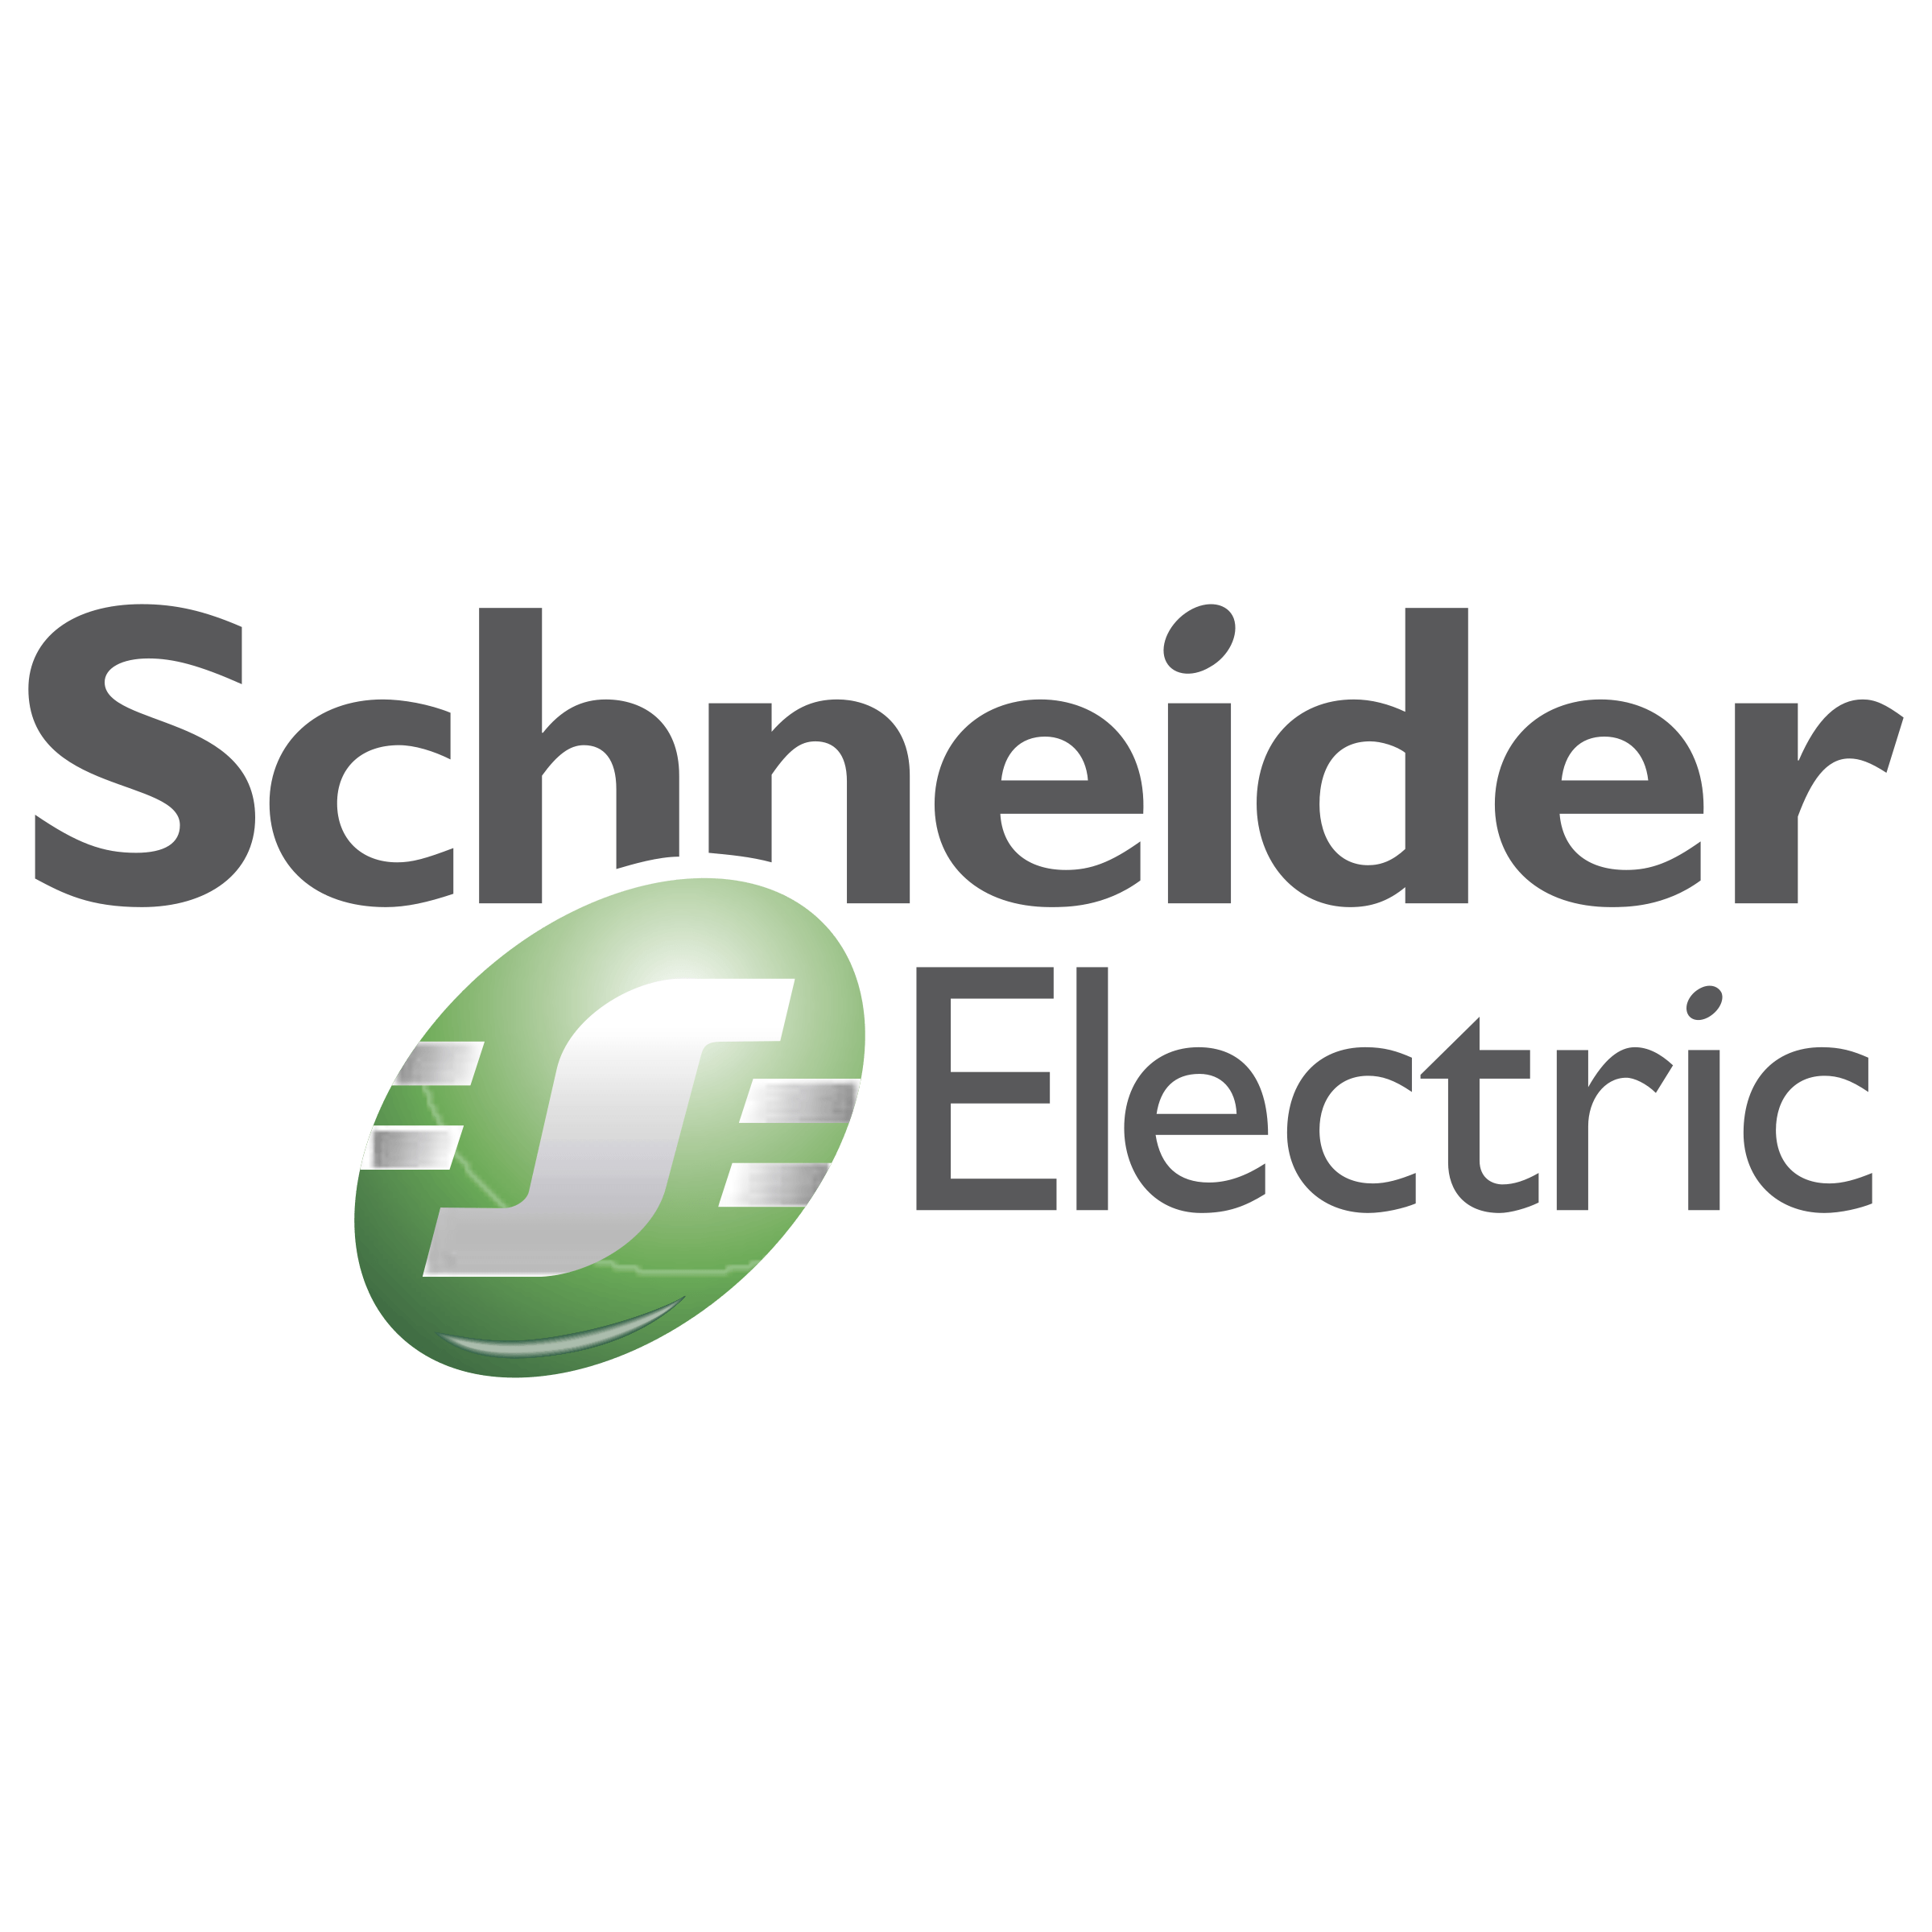 Schneider Electric Logo - Schneider Electric Logo PNG Transparent & SVG Vector - Freebie Supply